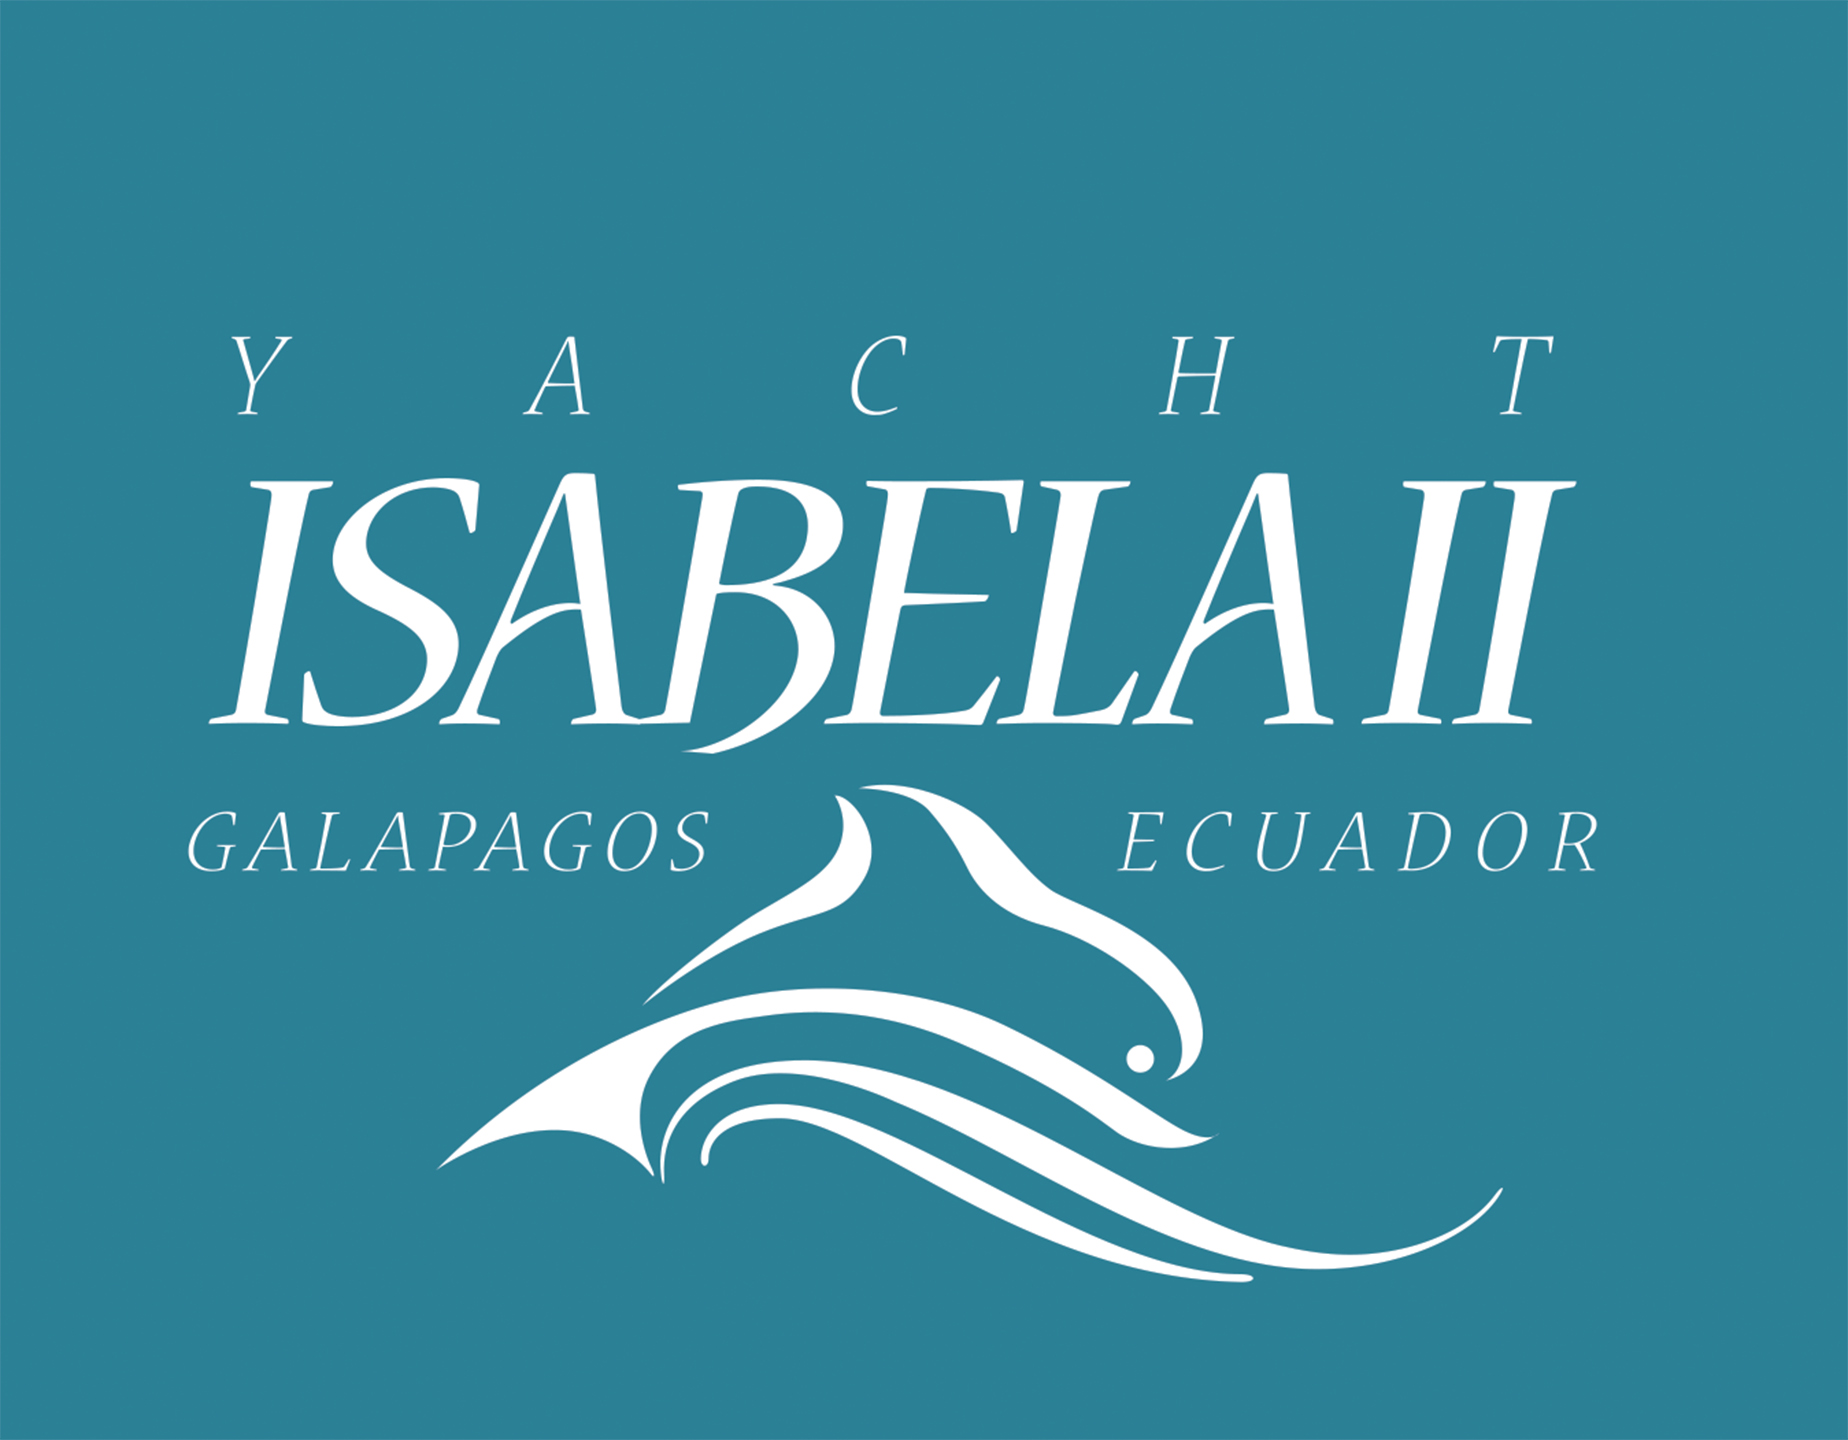 Galapagos crucero - Clave! Turismo